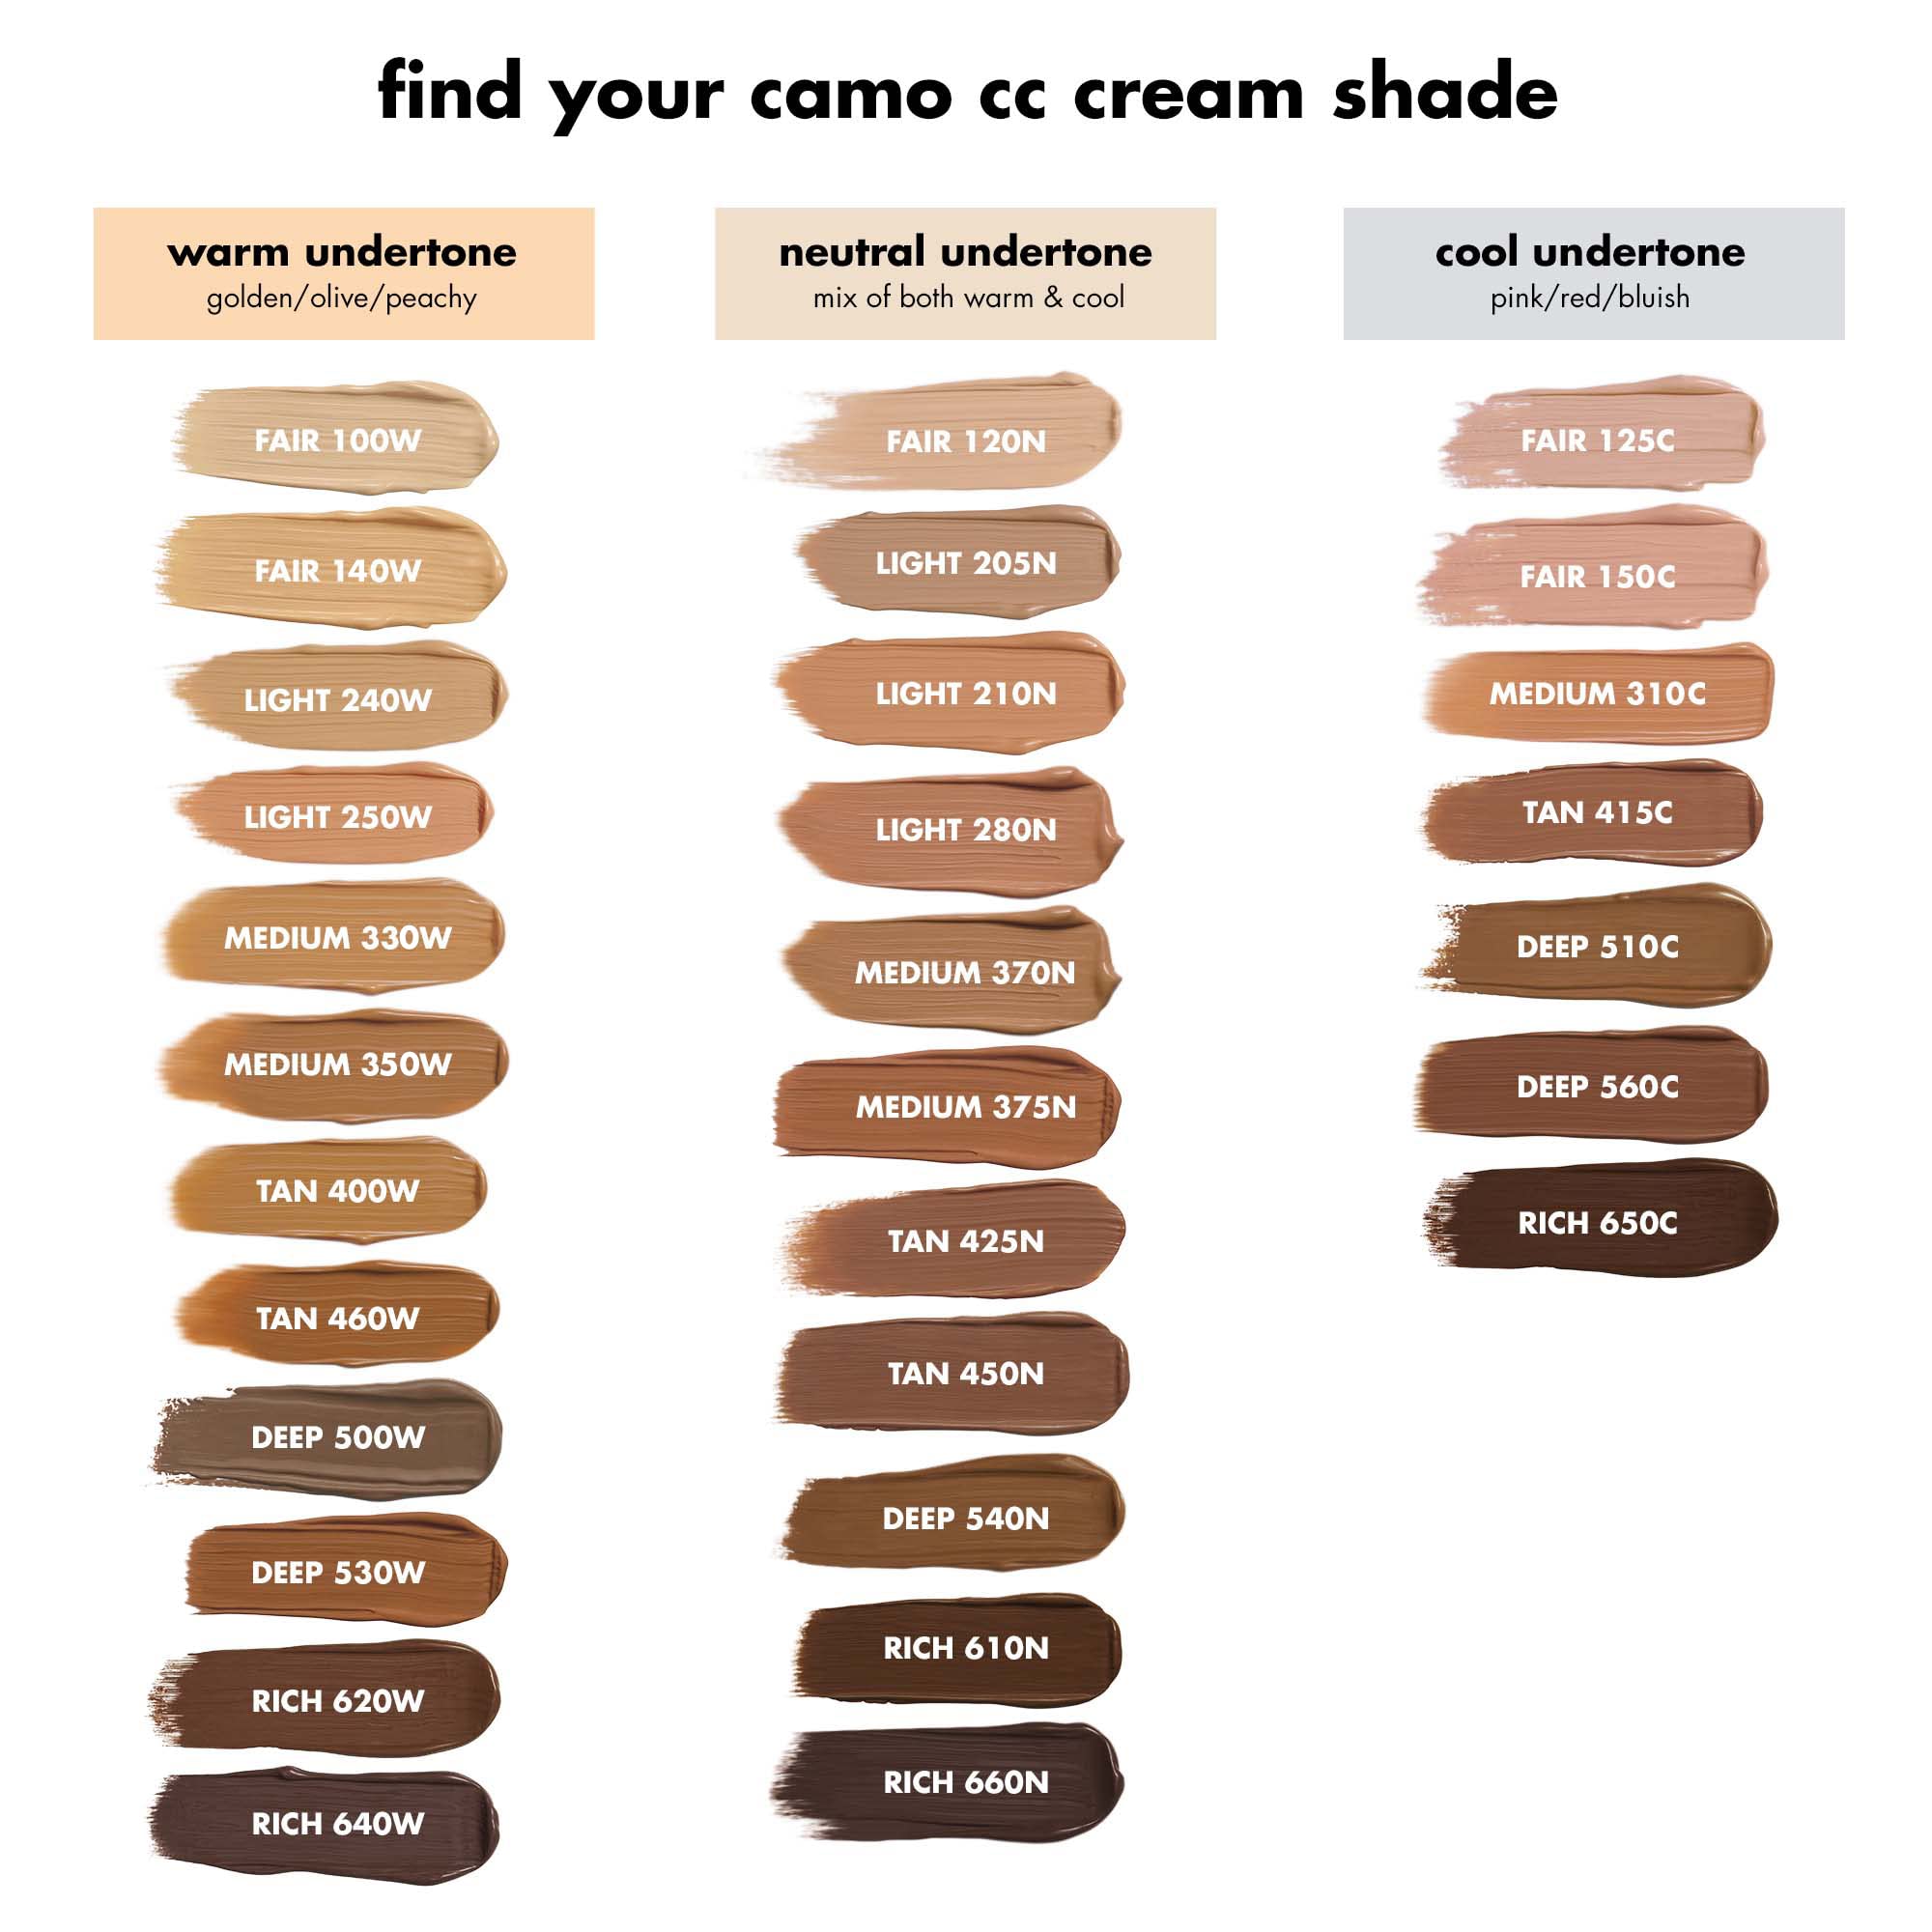 e.l.f. Camo CC Cream, Color Correcting Medium-To-Full Coverage Foundation with SPF 30, Light 205 N, 1.05 Oz (30g)